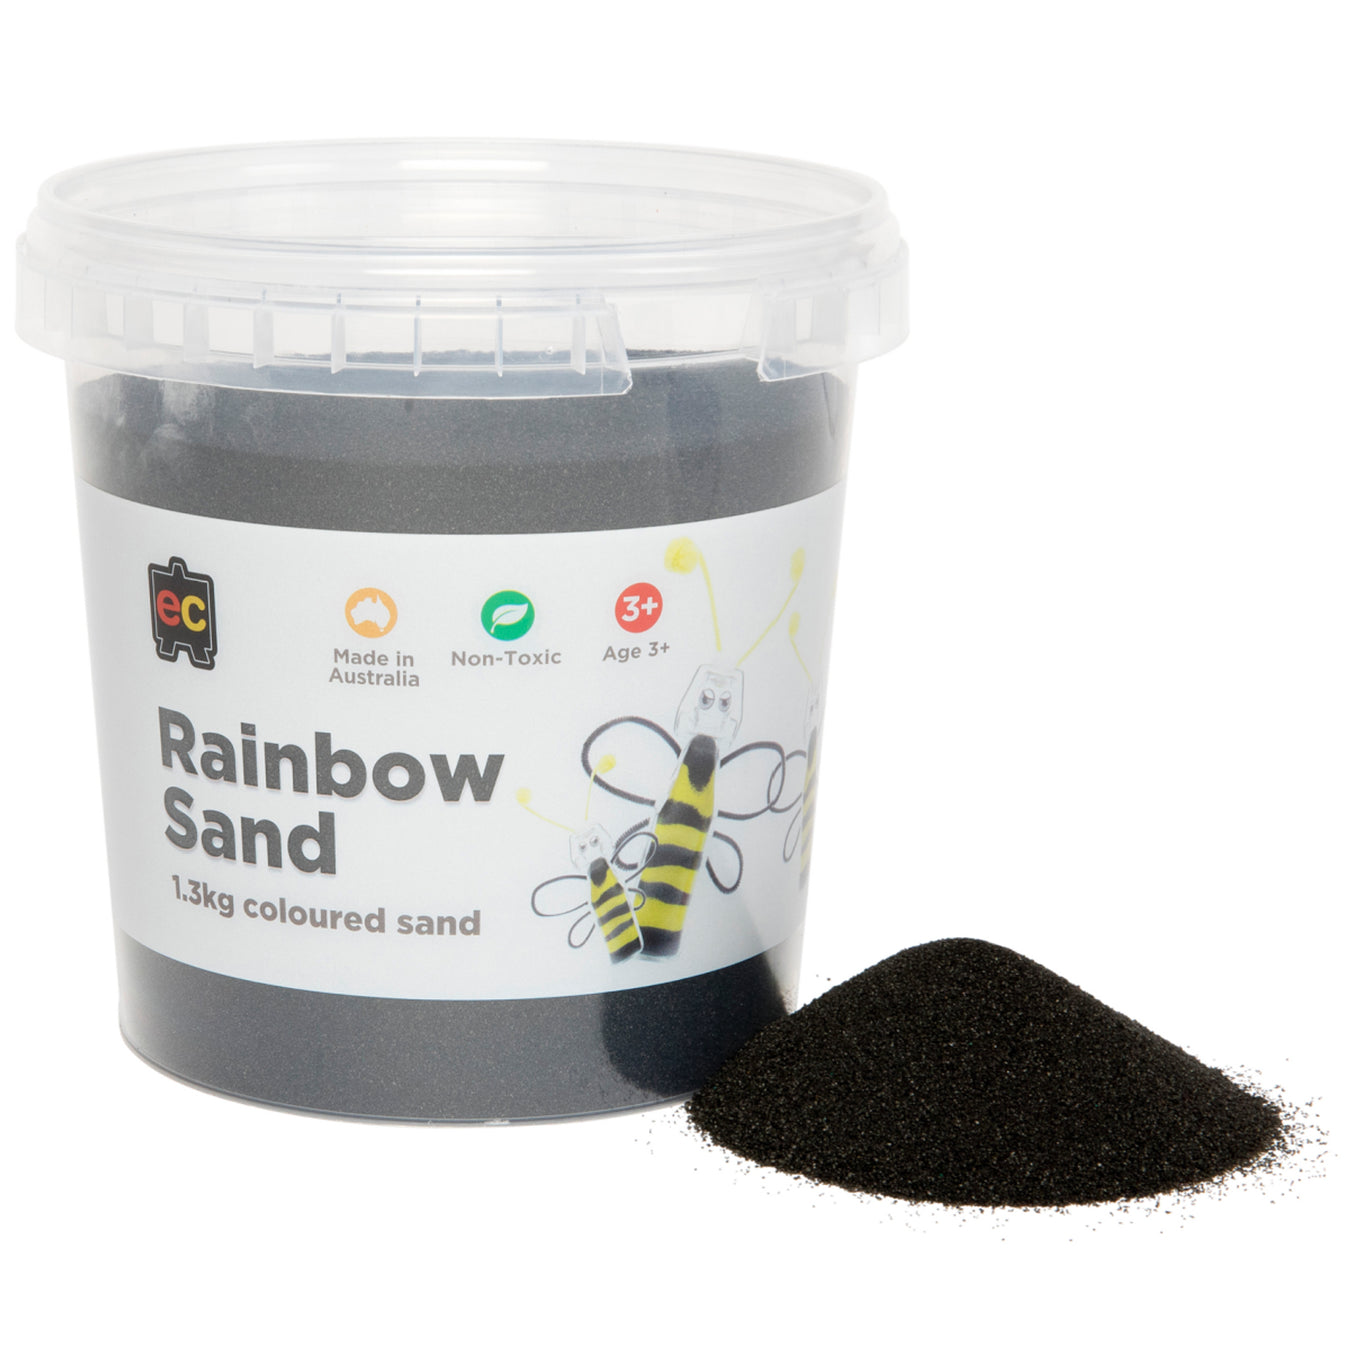 Coloured Sand